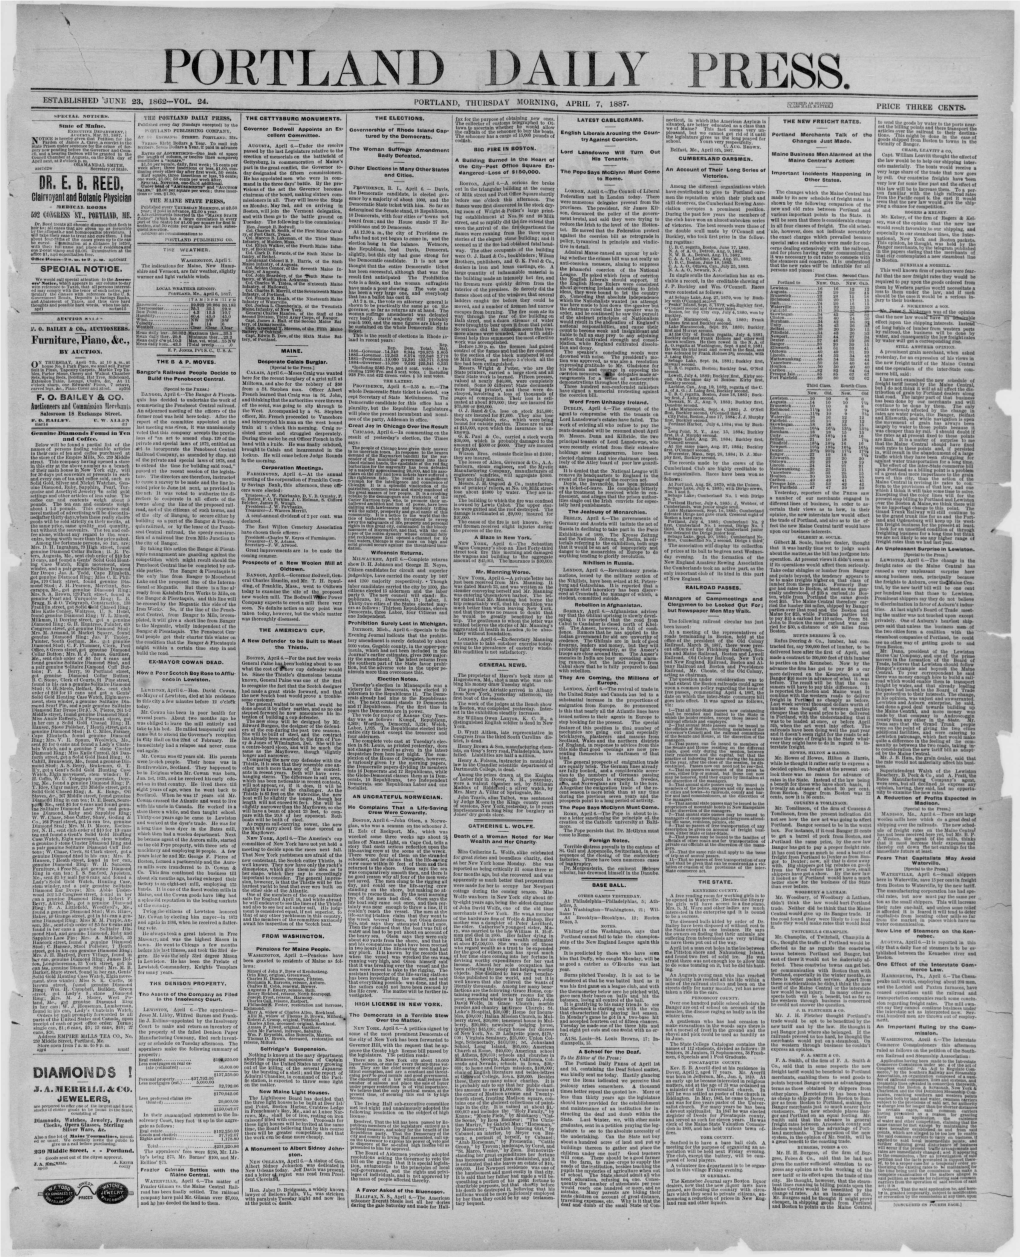 Portland Daily Press: April 07,1887